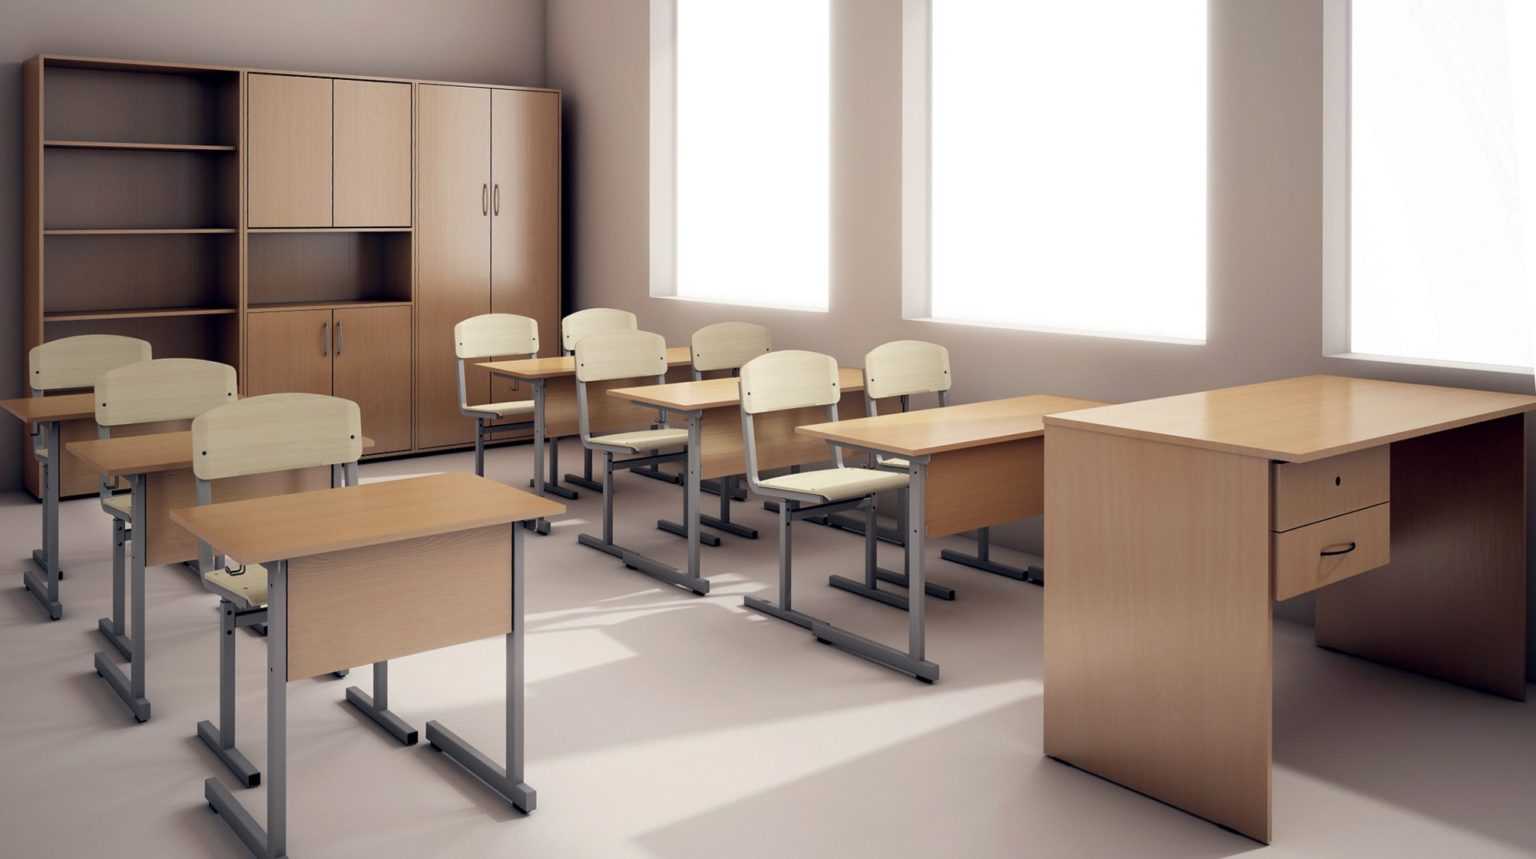 Маркировка мебели в школе по санпин 2021